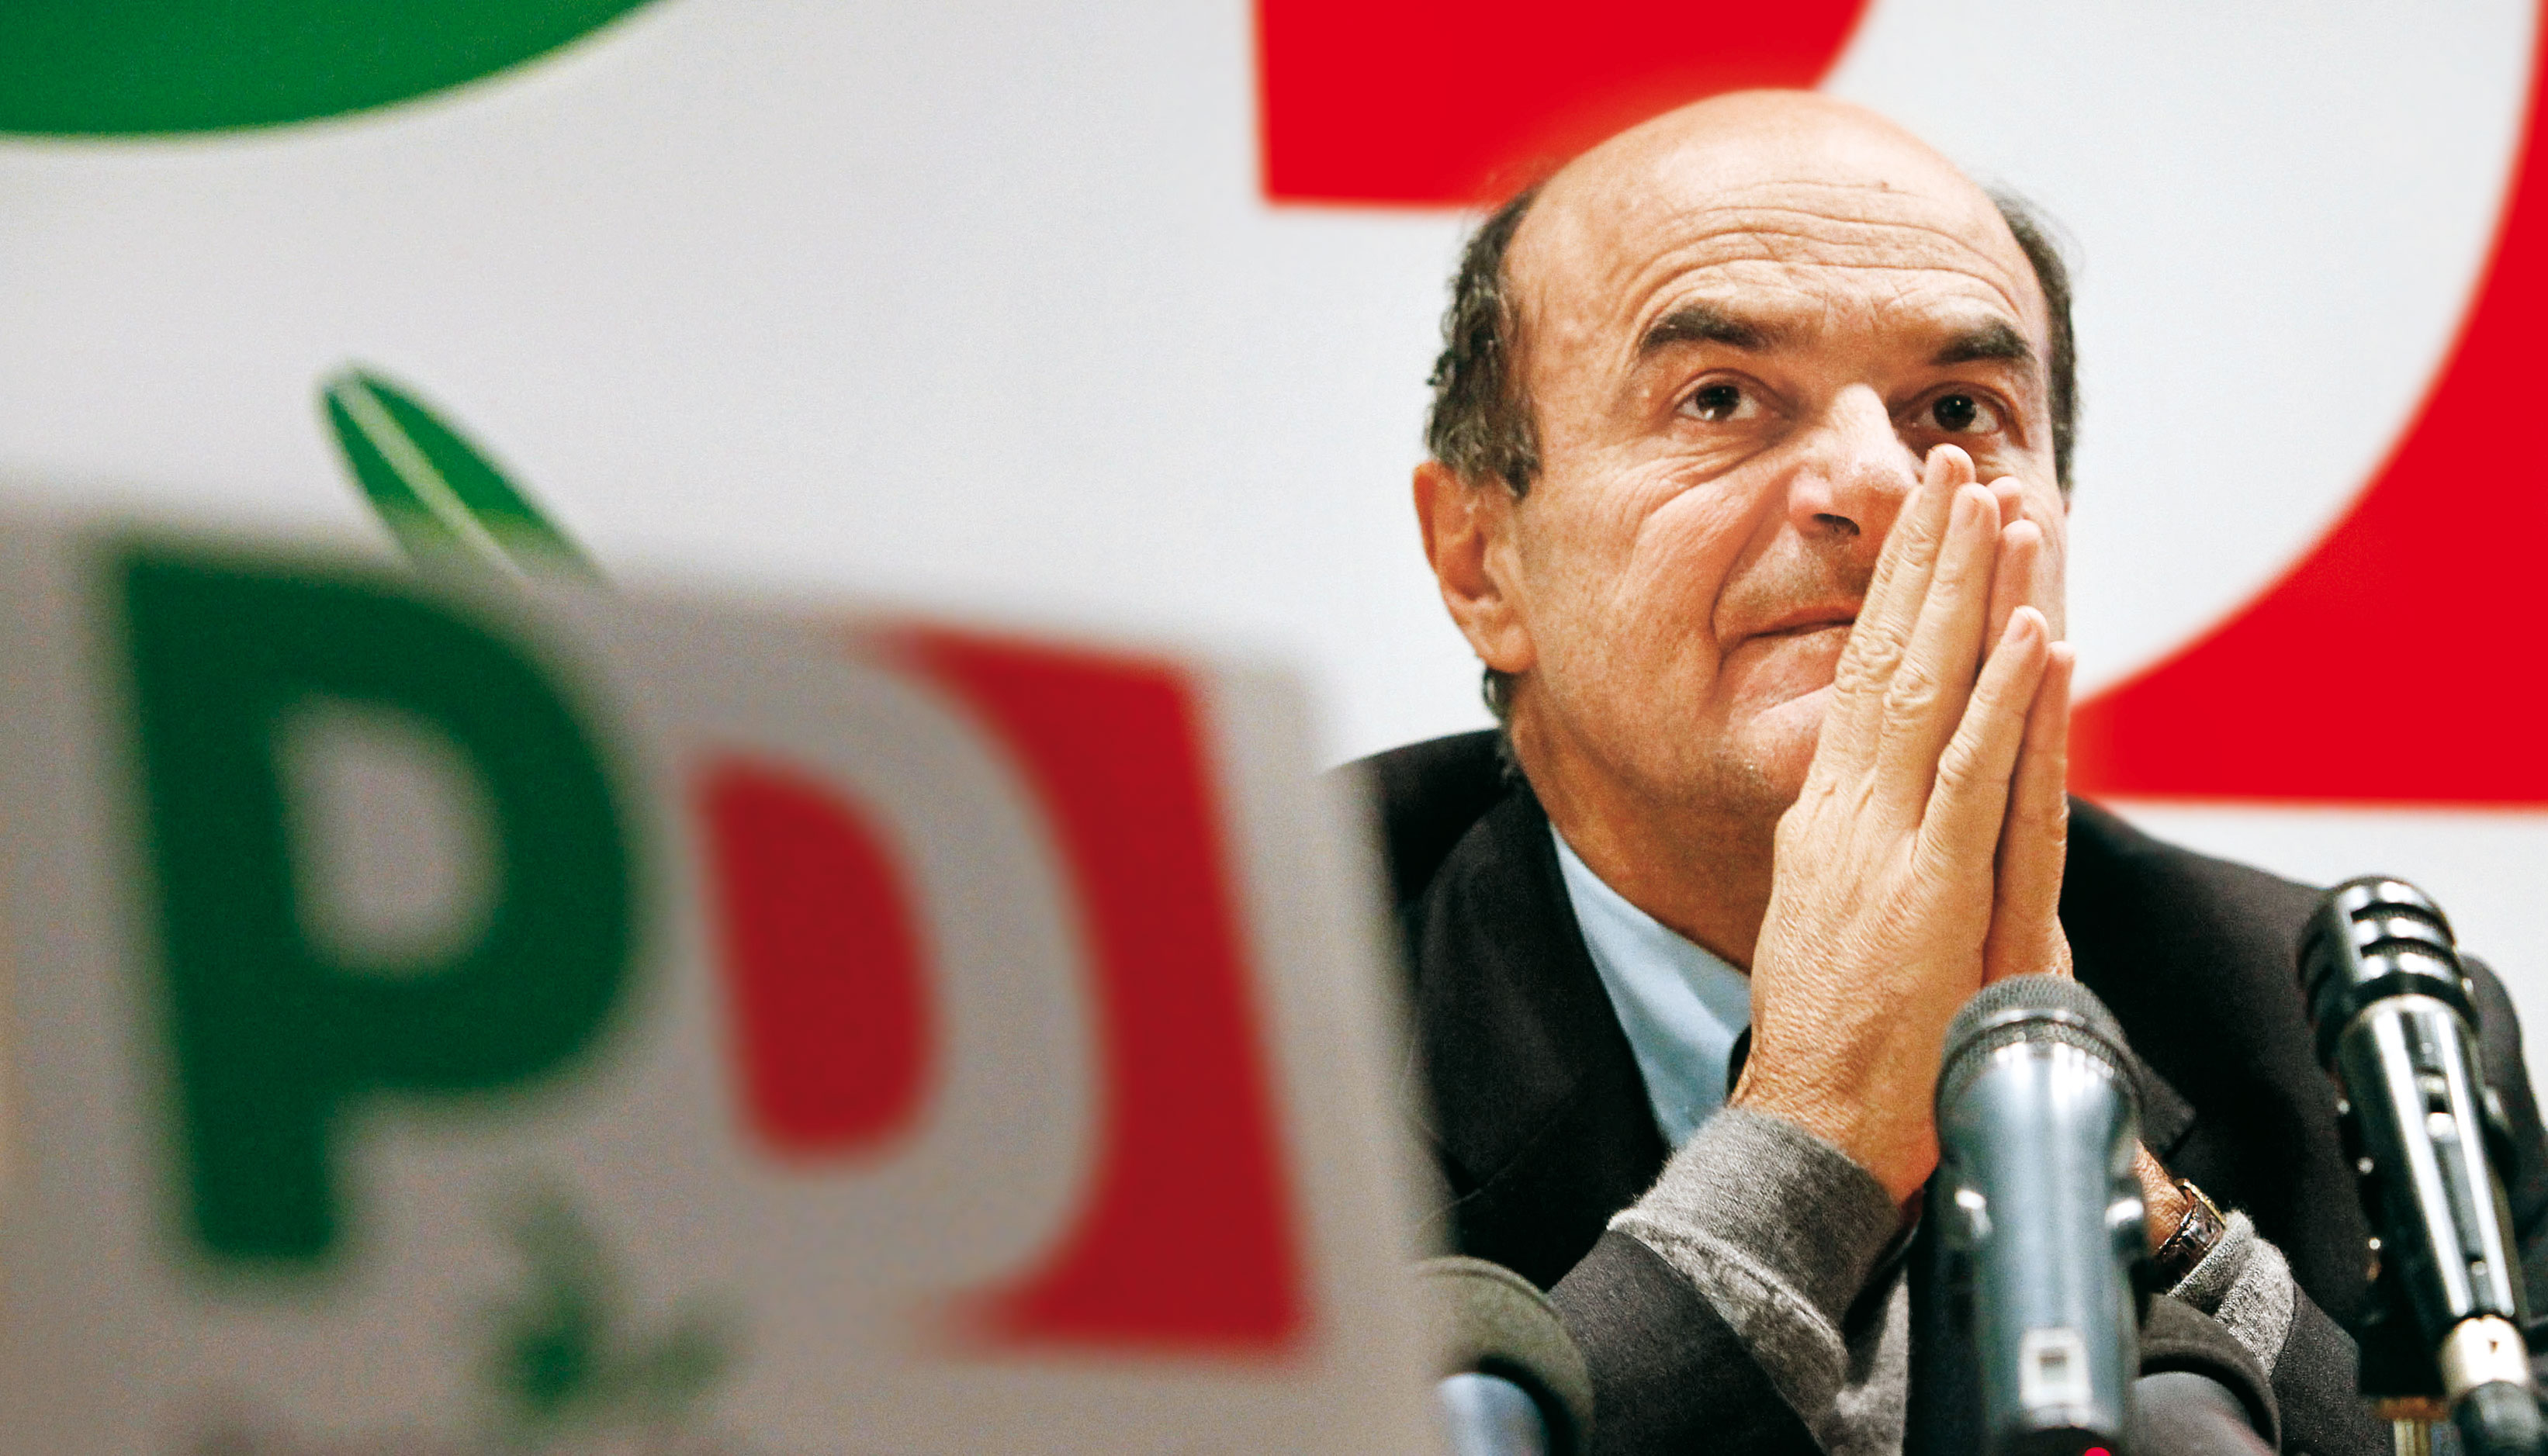 Nuovo governo, Bersani ancora al bivio